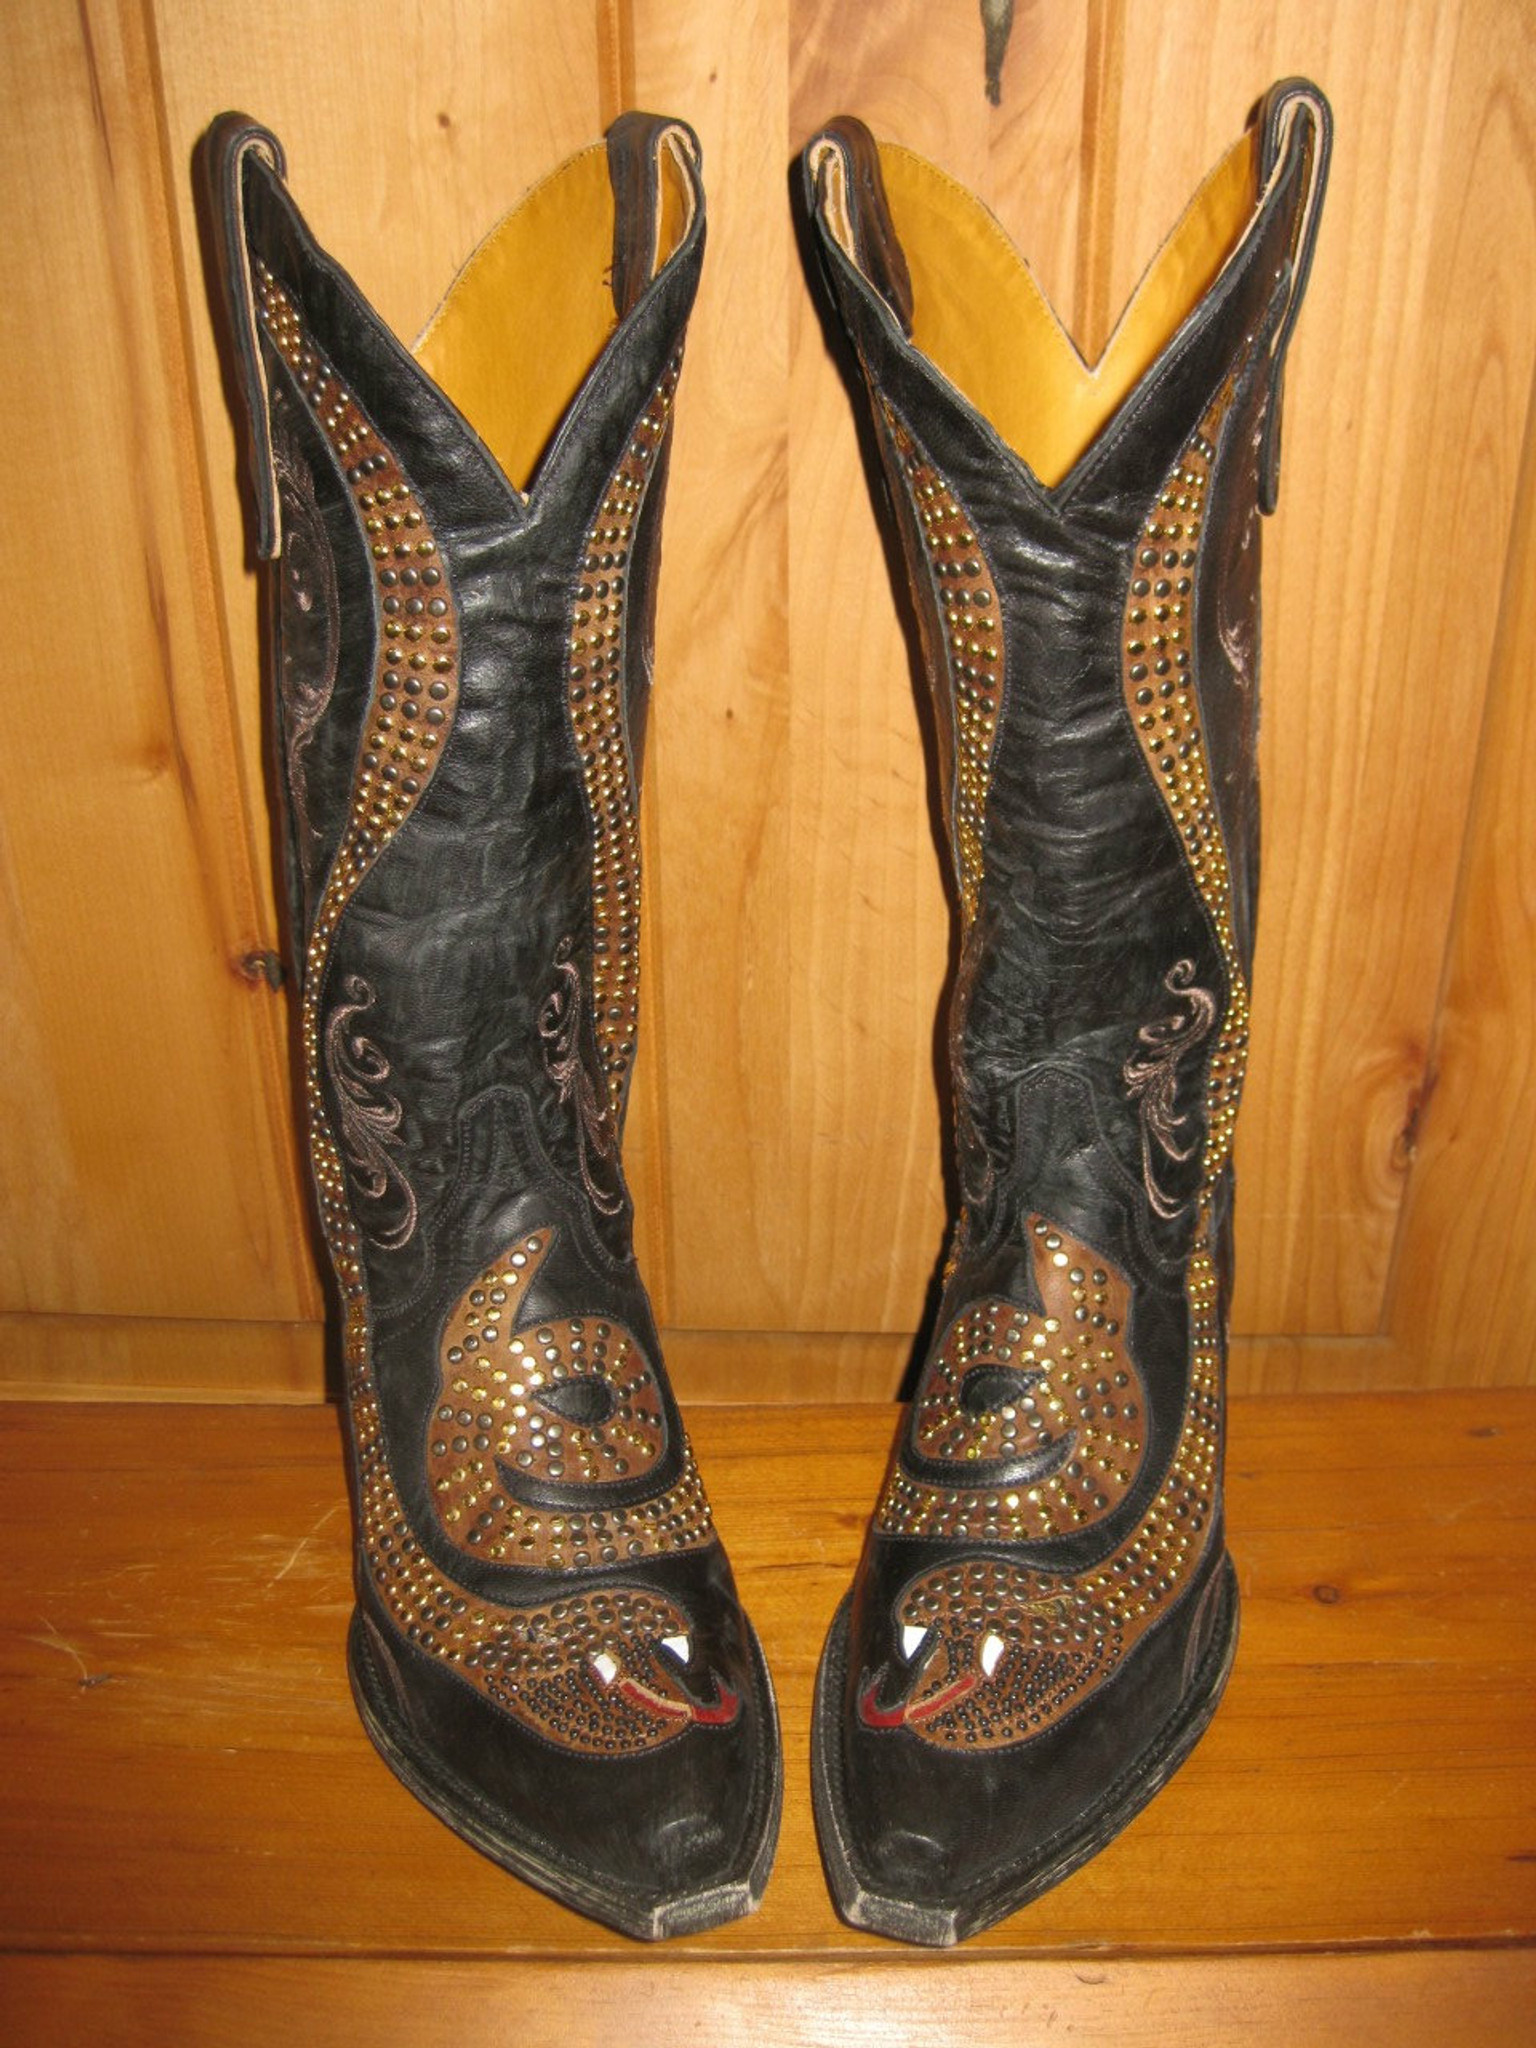 Old Gringo Snake Boots | Old Gringo Boots L055-1